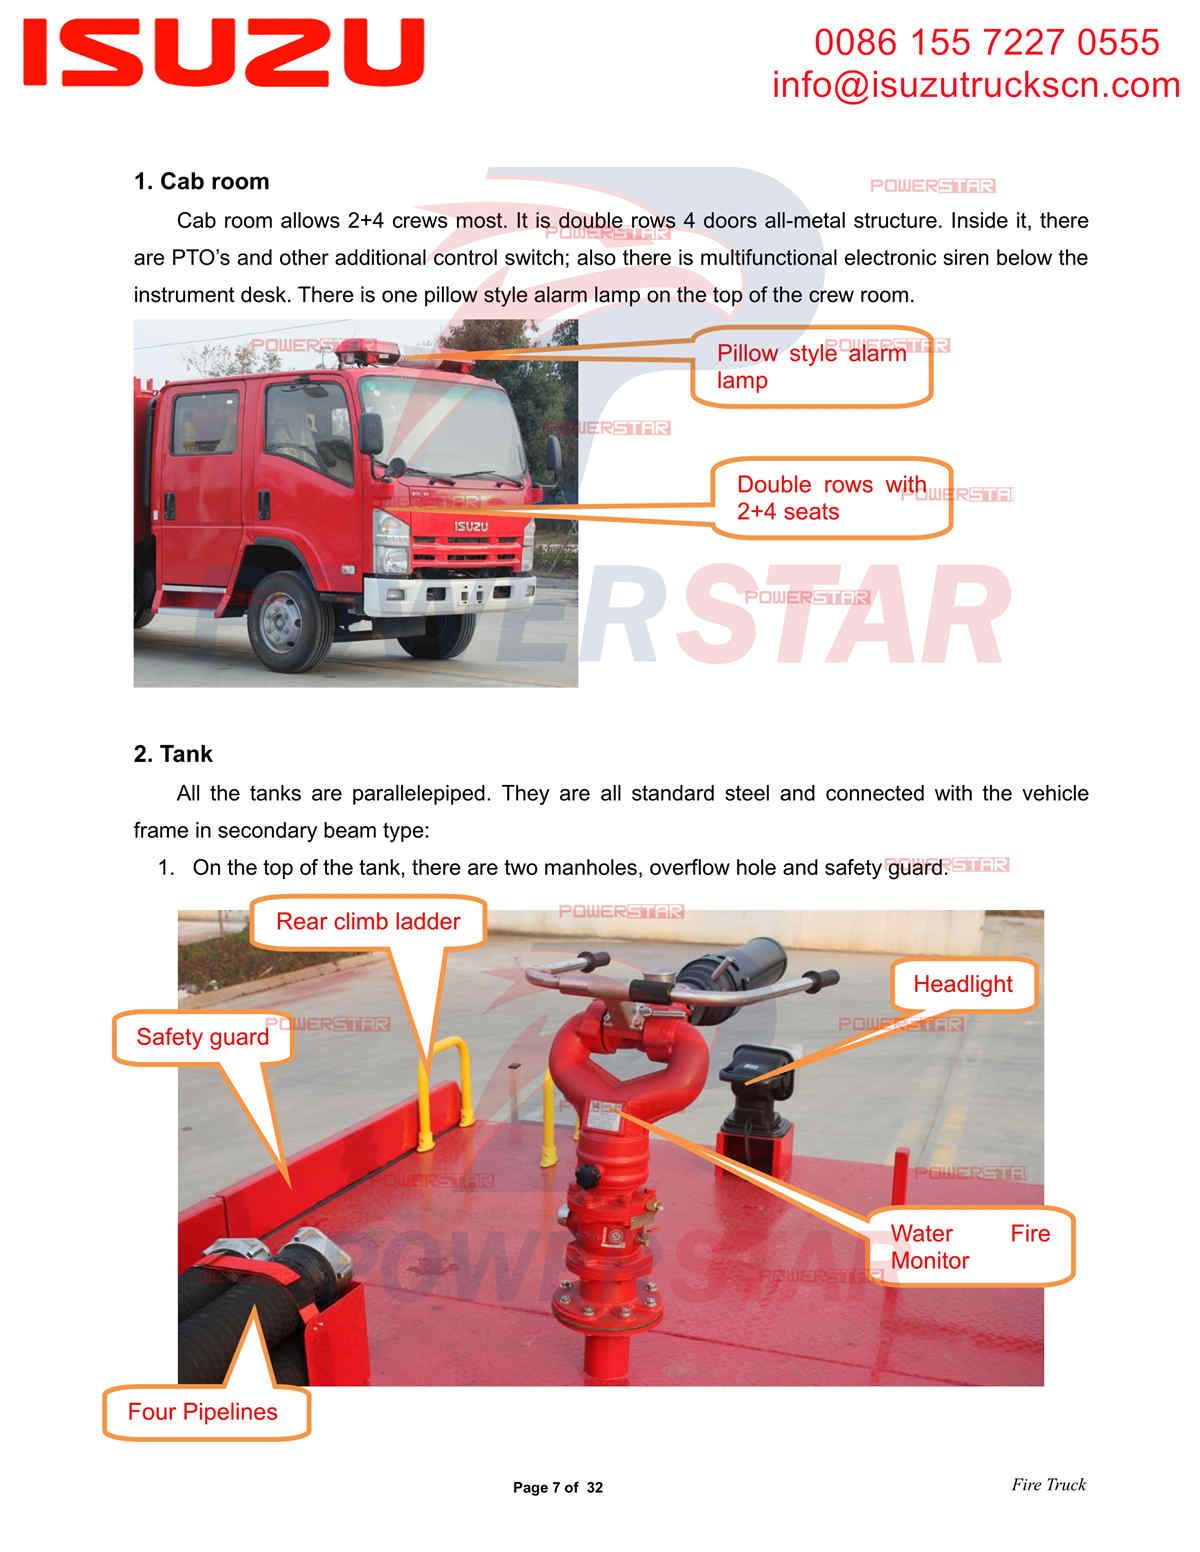 POWERSTAR ISUZU Fire Truck Manual экспорт Сьерра-Леоне